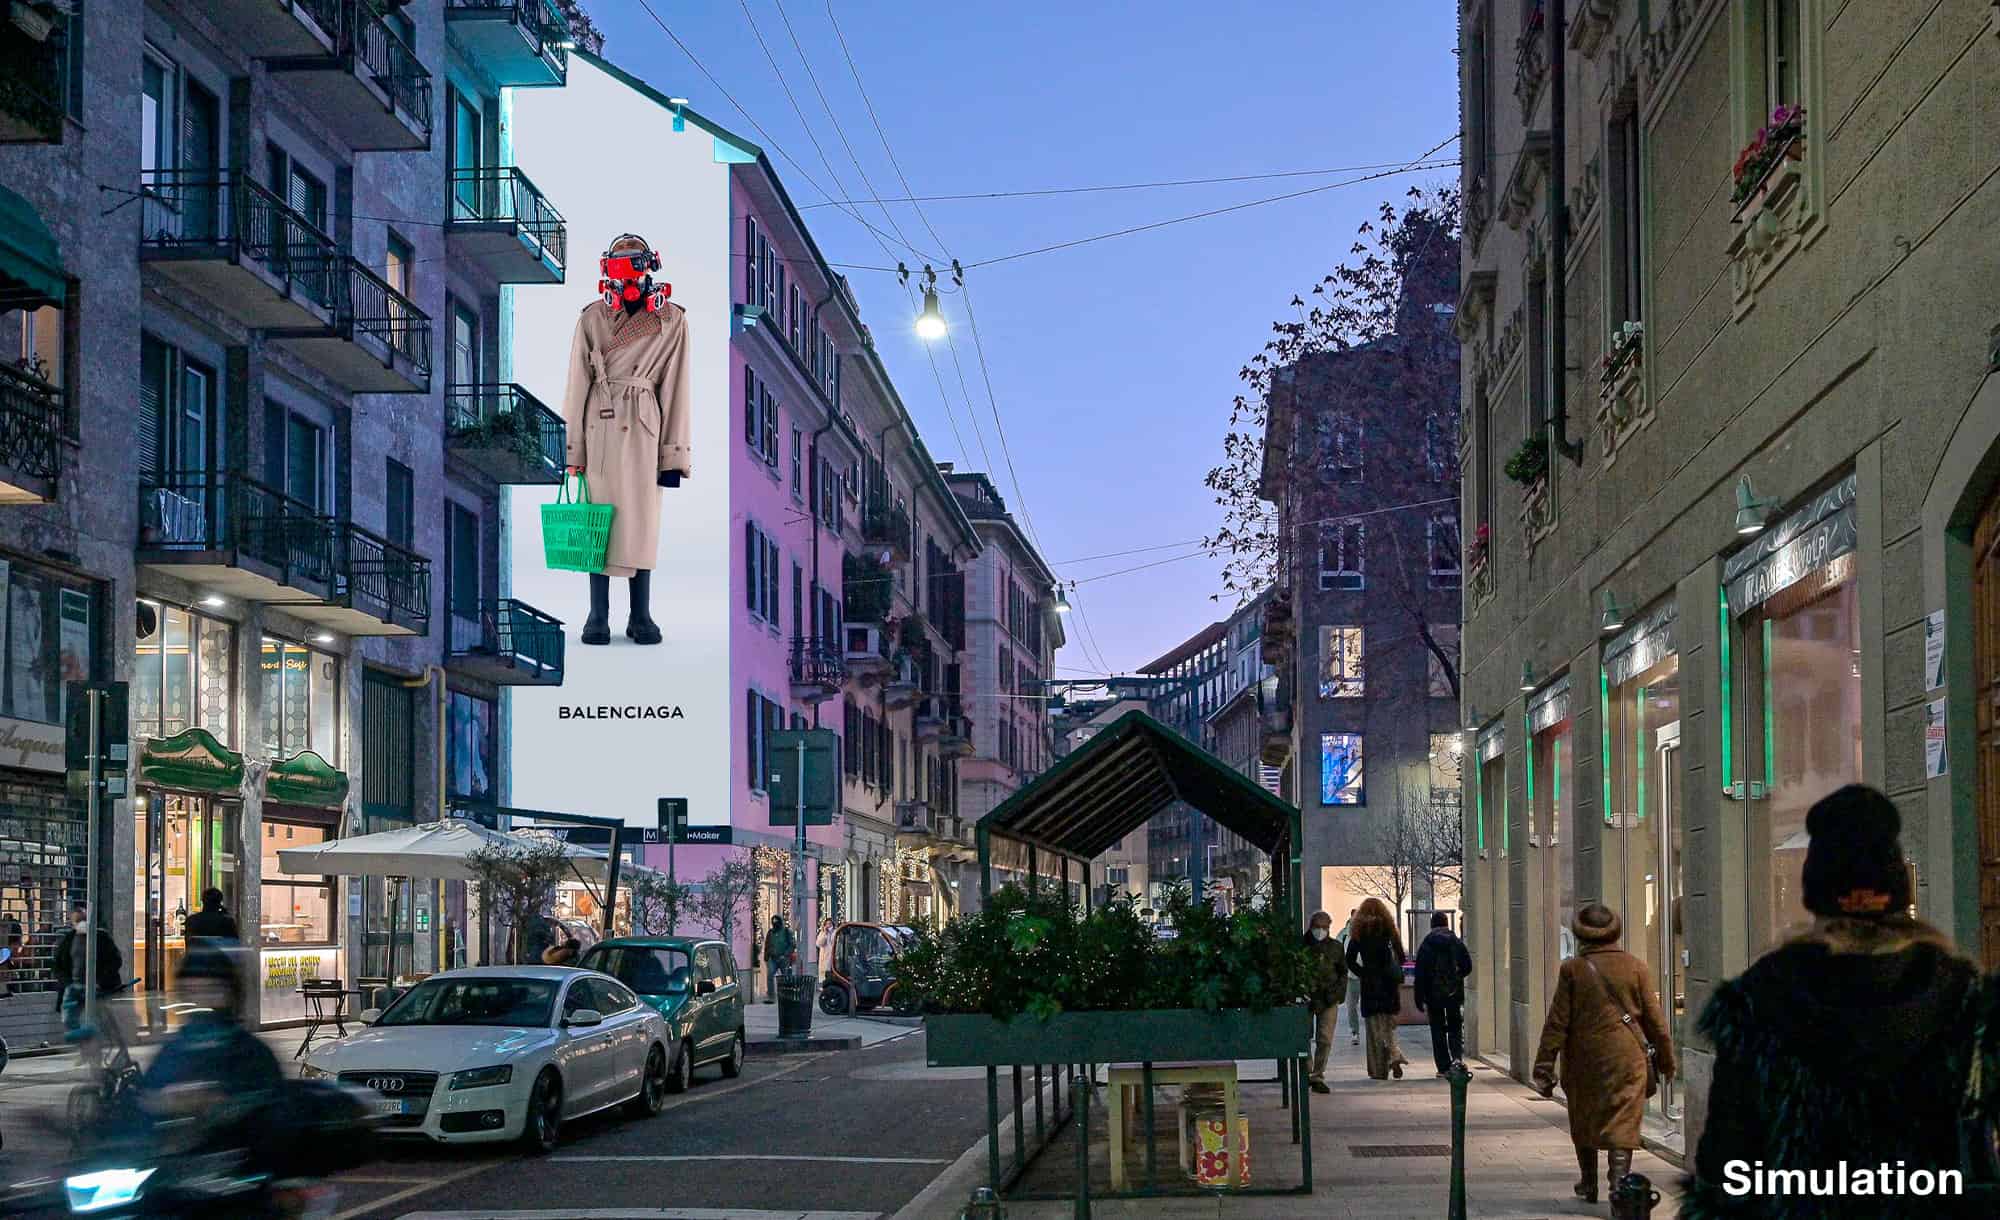 Mural Garibaldi 62 in Milan by Streetvox